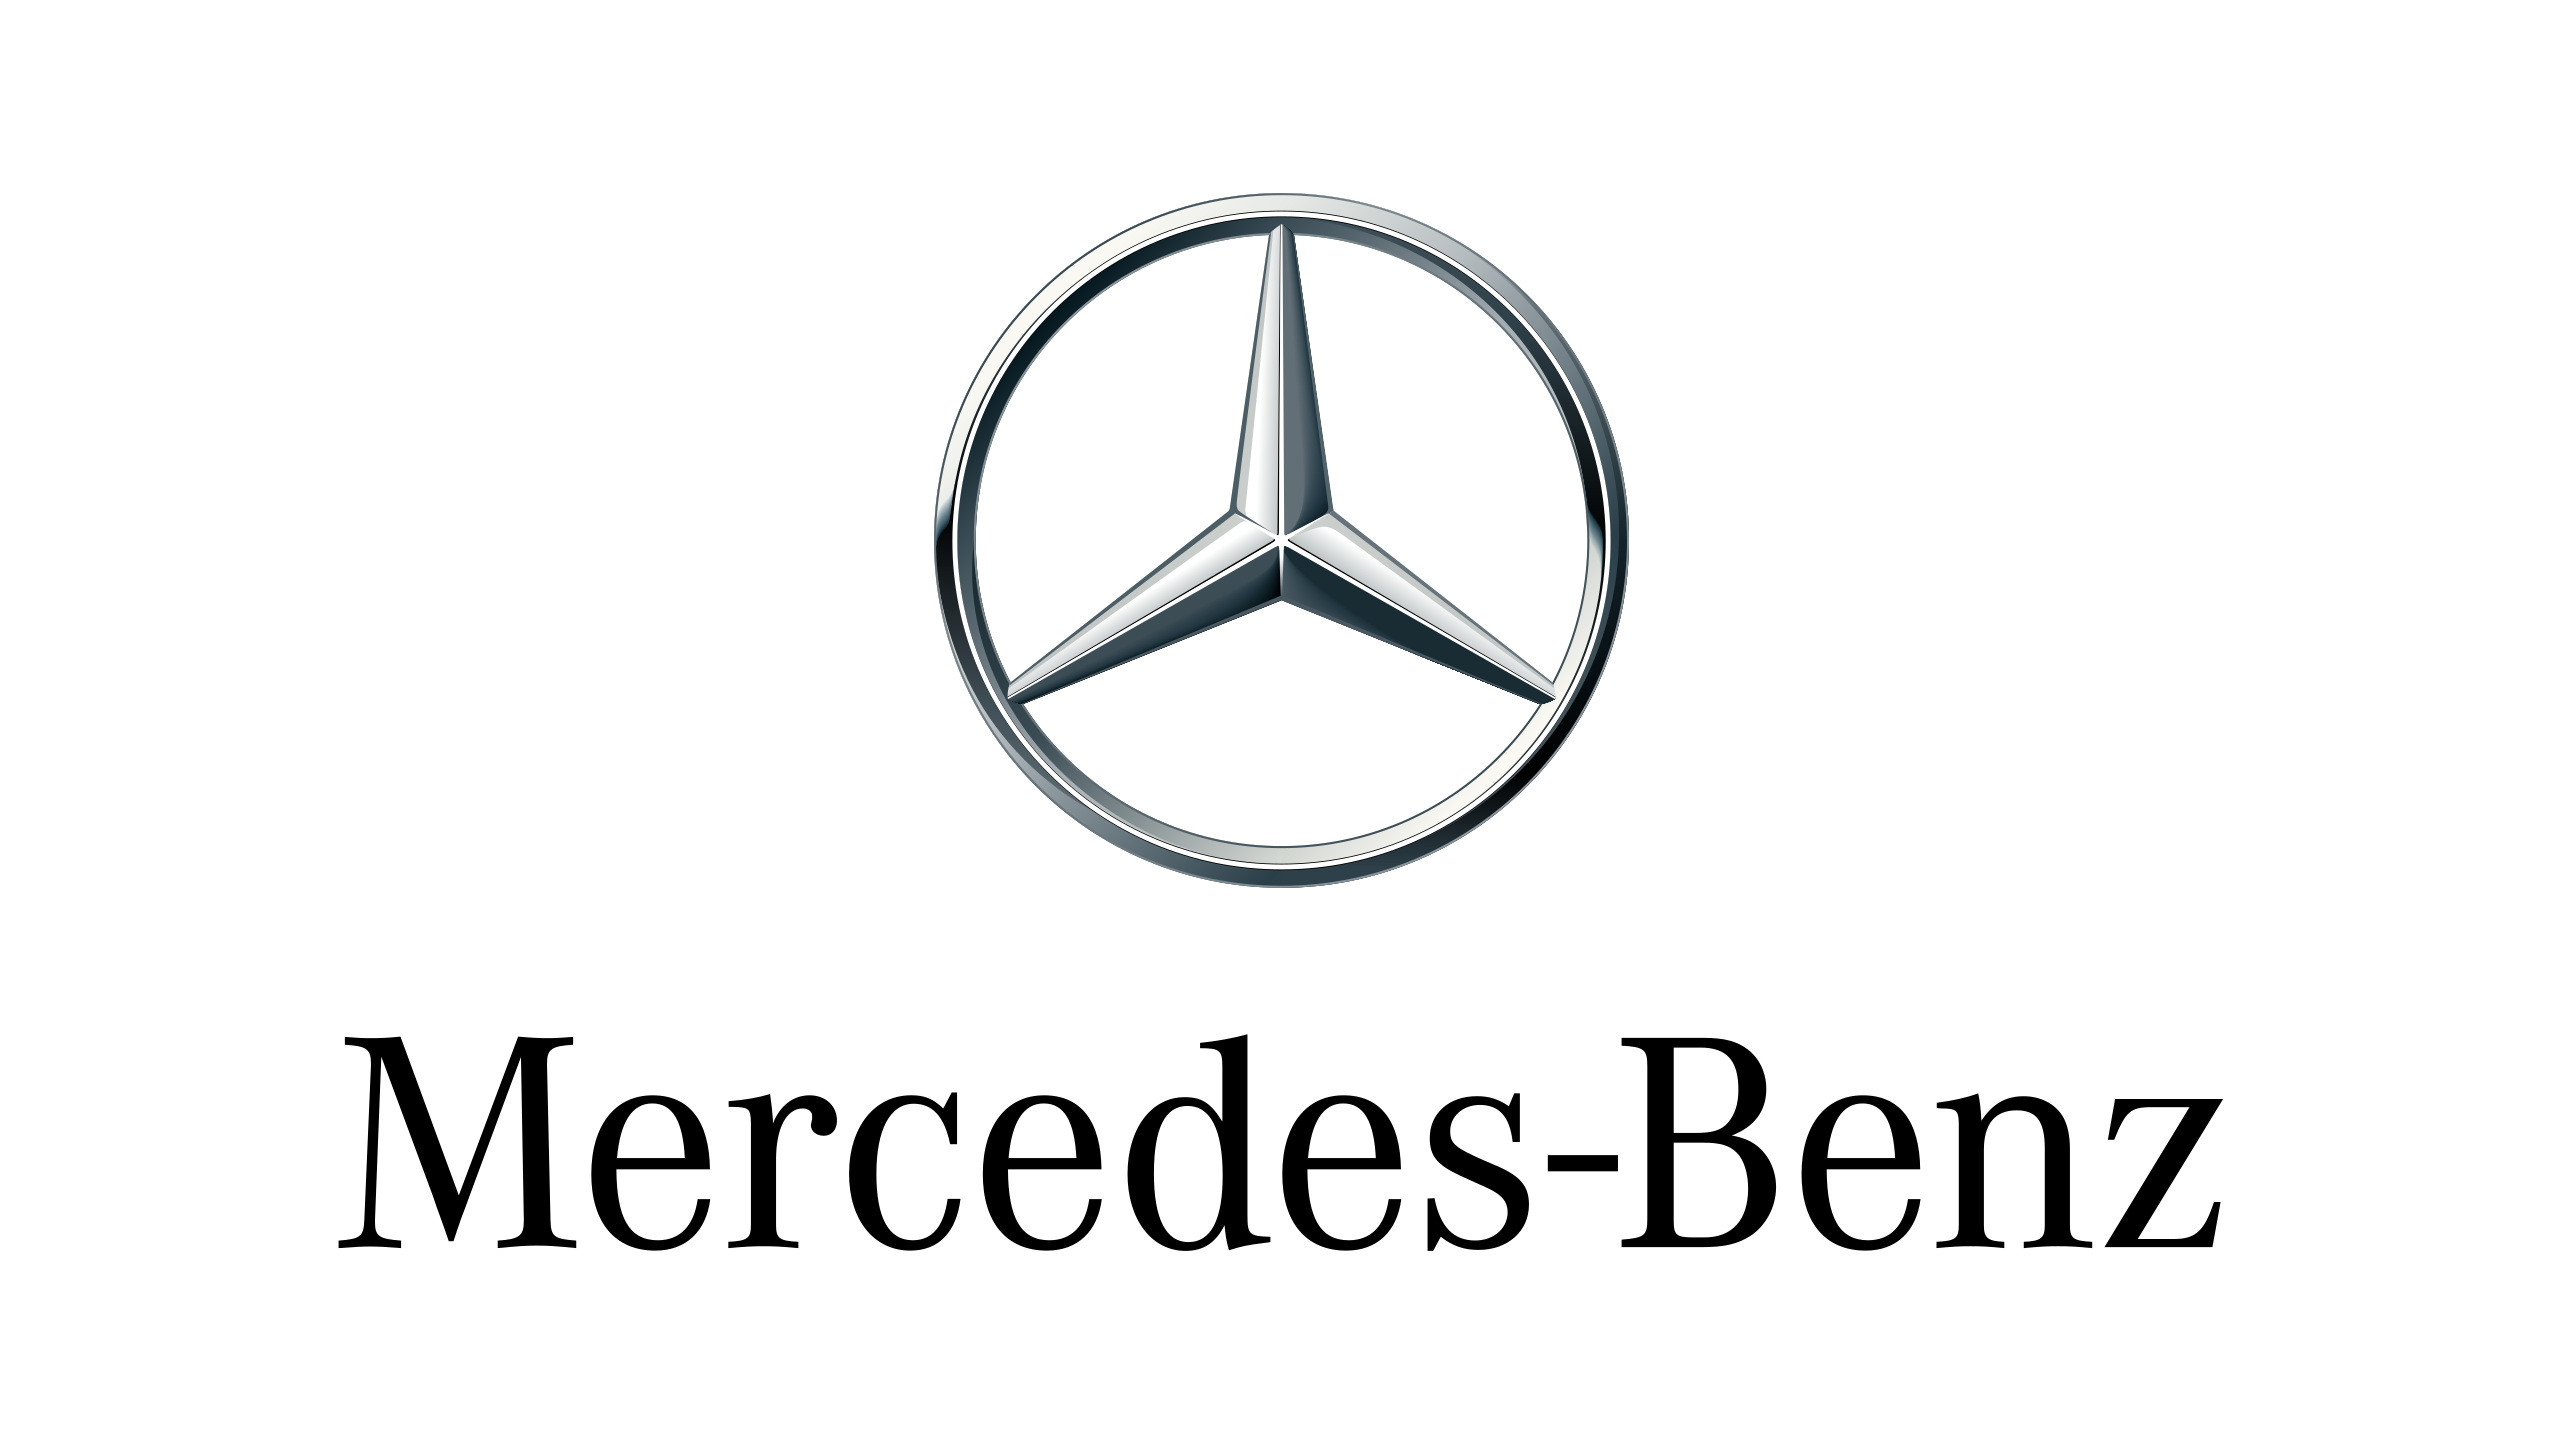 Mercedes-Benz A-Class - Wikipedia